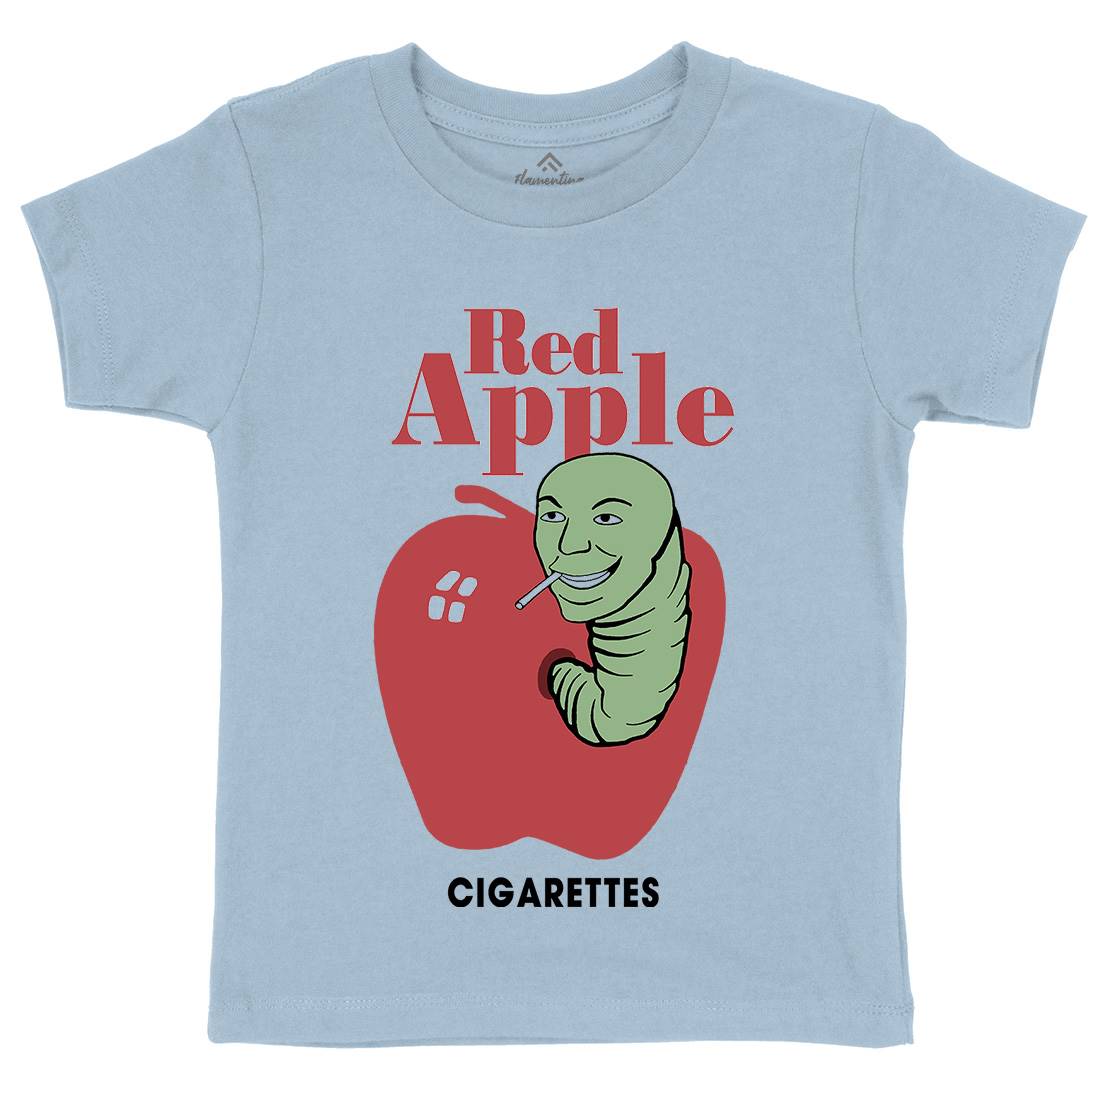 Red Apple Cigarettes Kids Crew Neck T-Shirt Retro D211